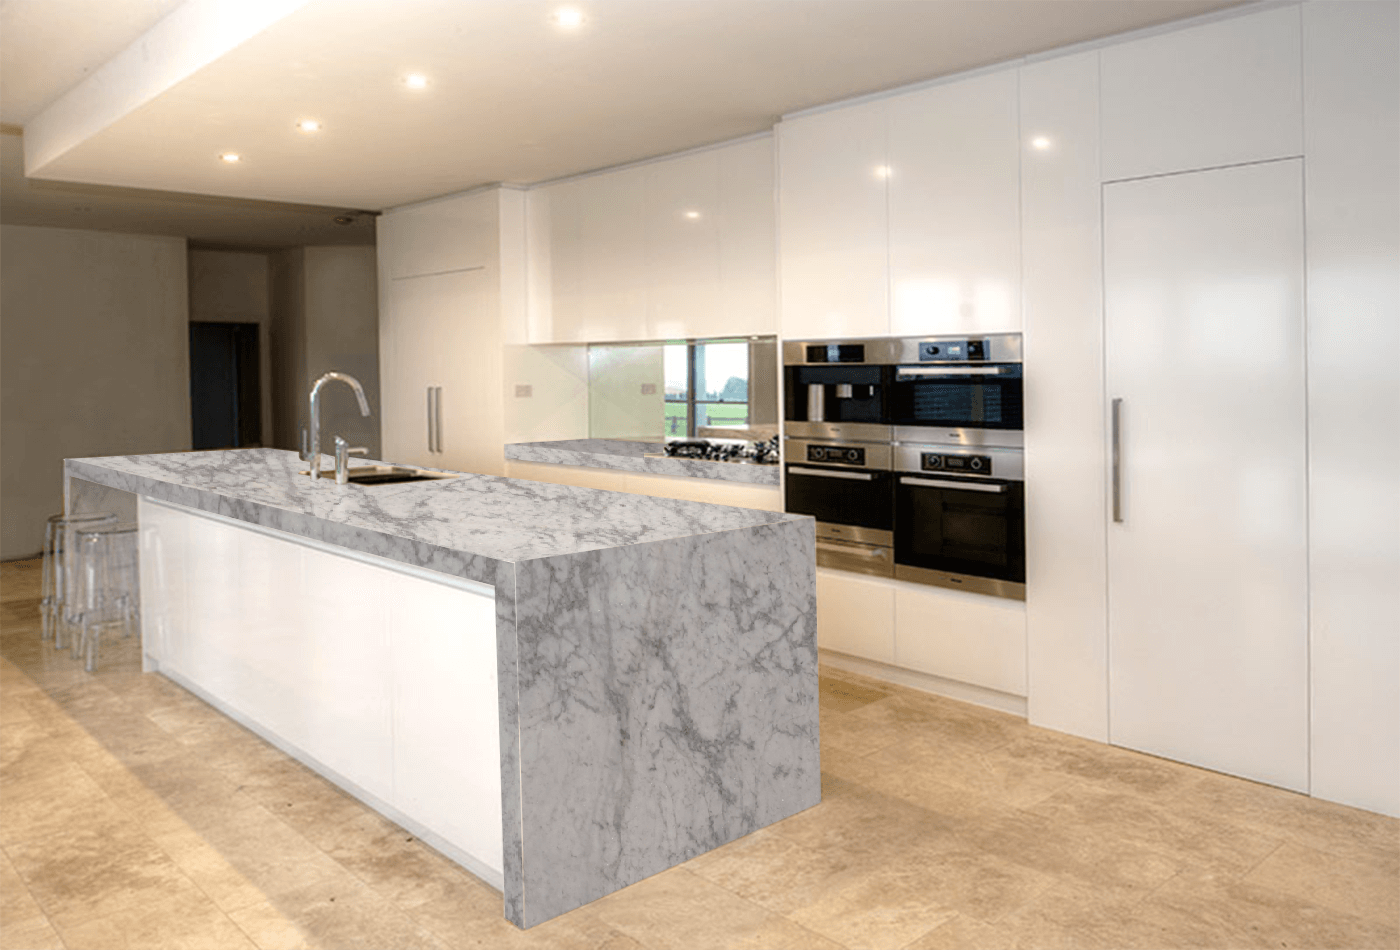 Vento White Granite; White Surface Exclusive Range of Styles